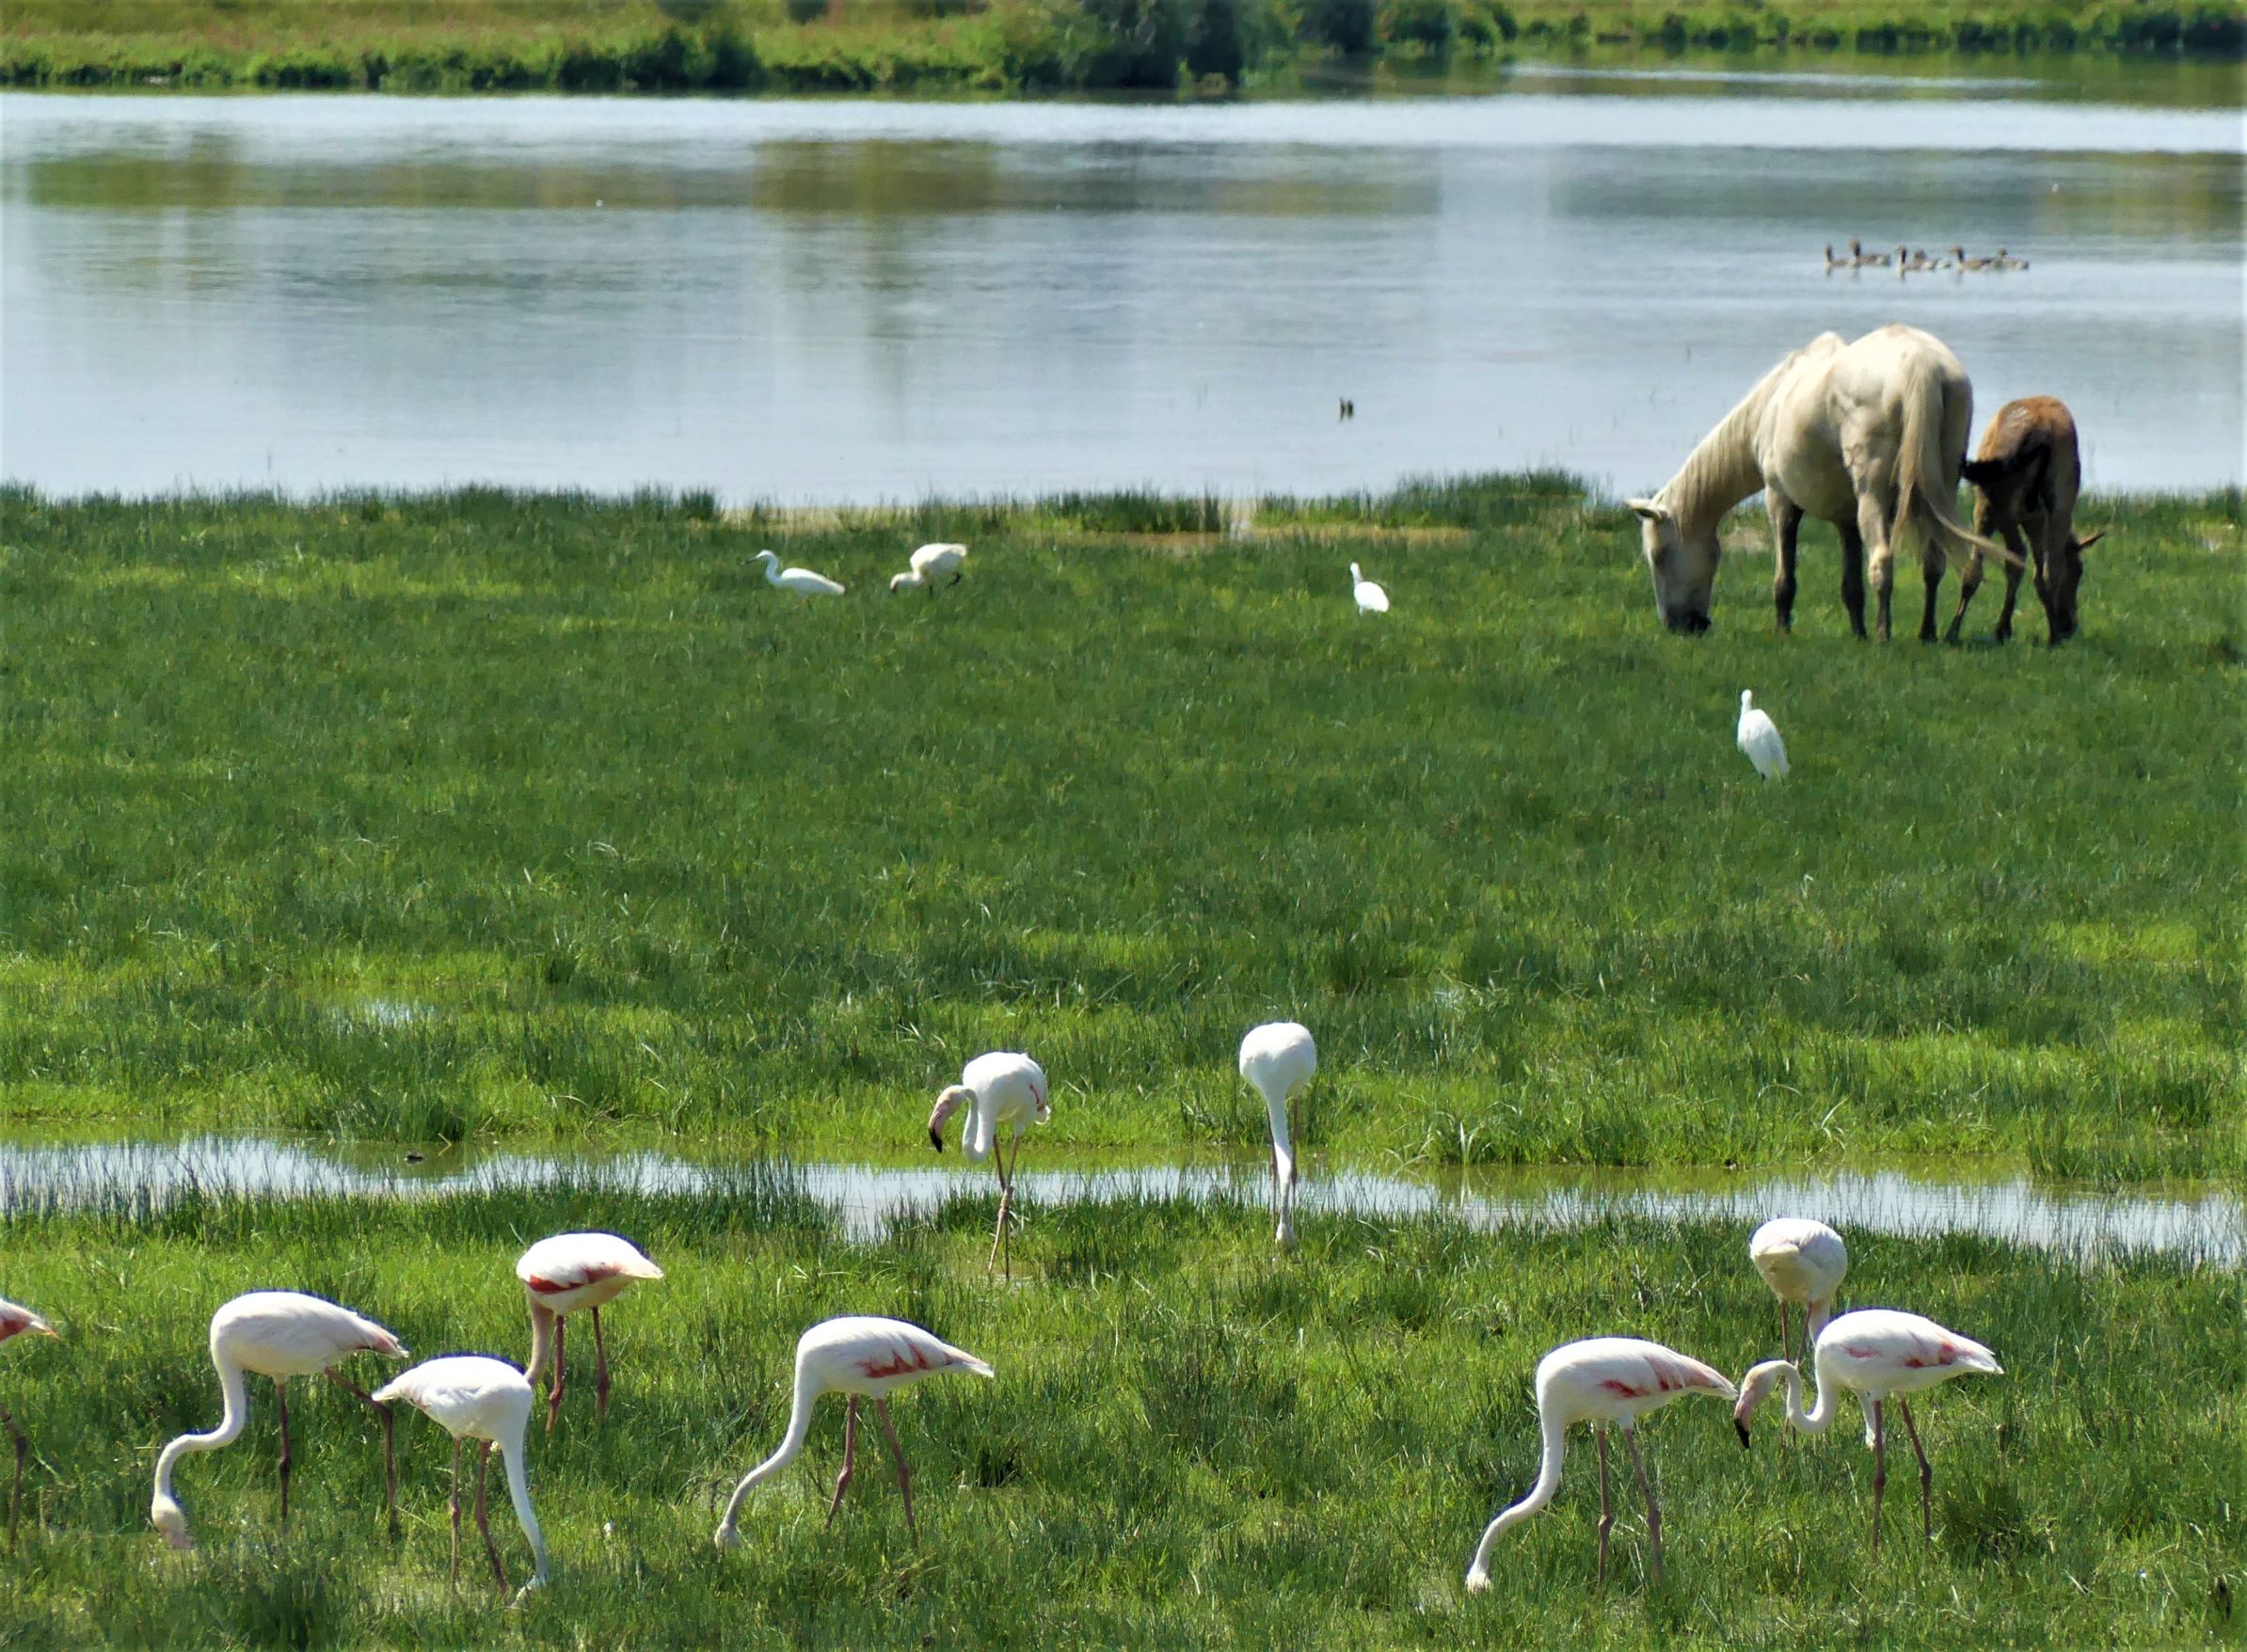 Flamingoes, egrets and horses mix easily in the Marismas del Rocίo. Doñana, Spain.